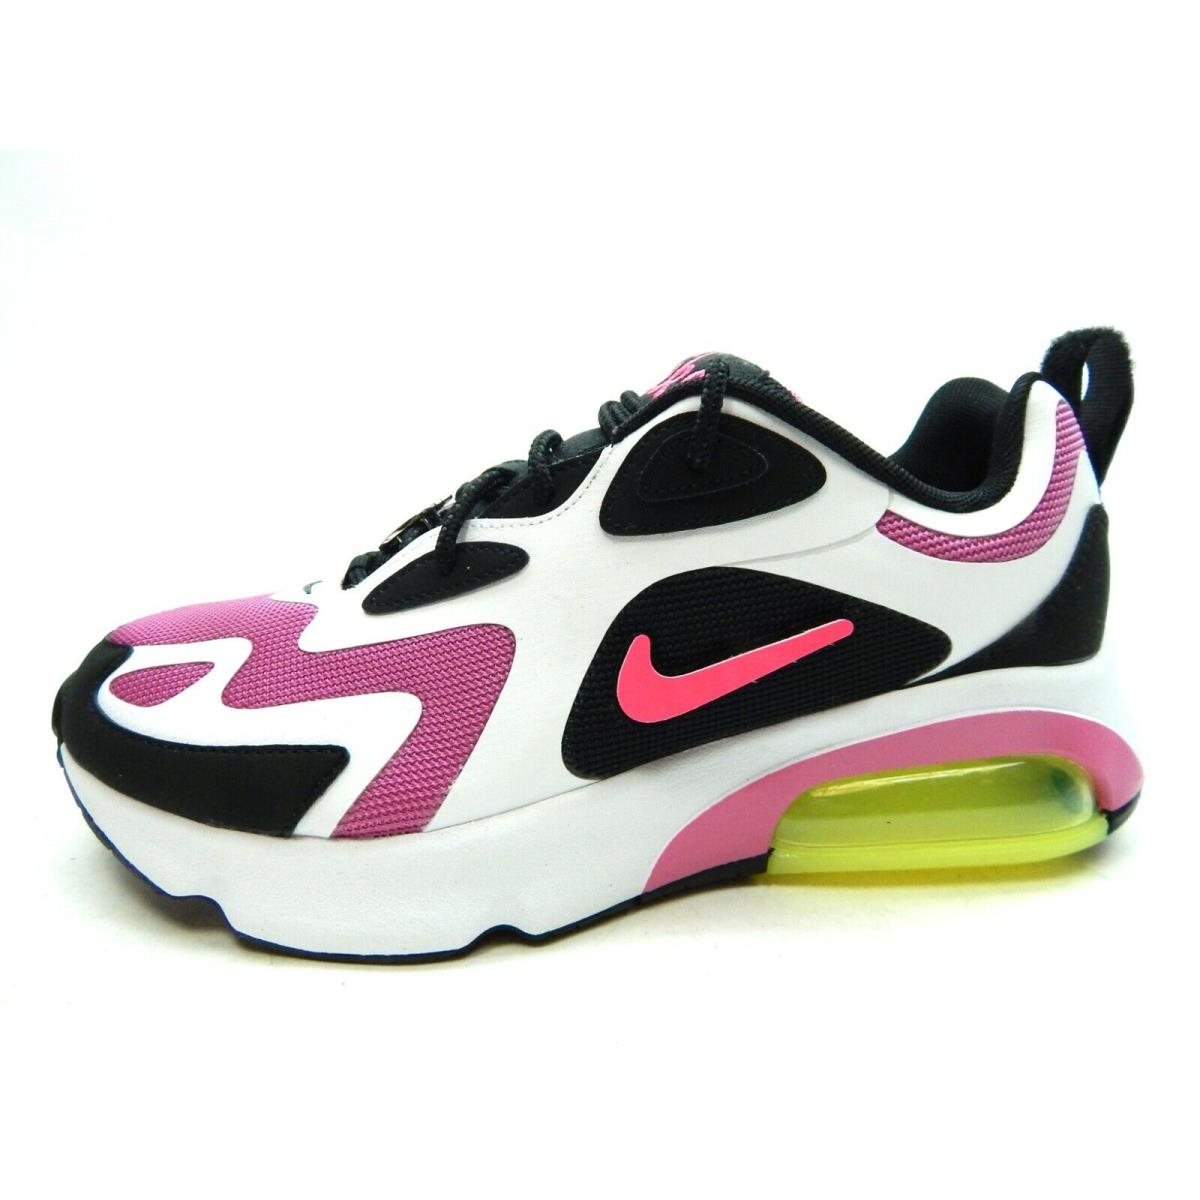 Nike Women`s Air Max 200 Black Hyper Pink CU4745 001 Shoes Size 6.5